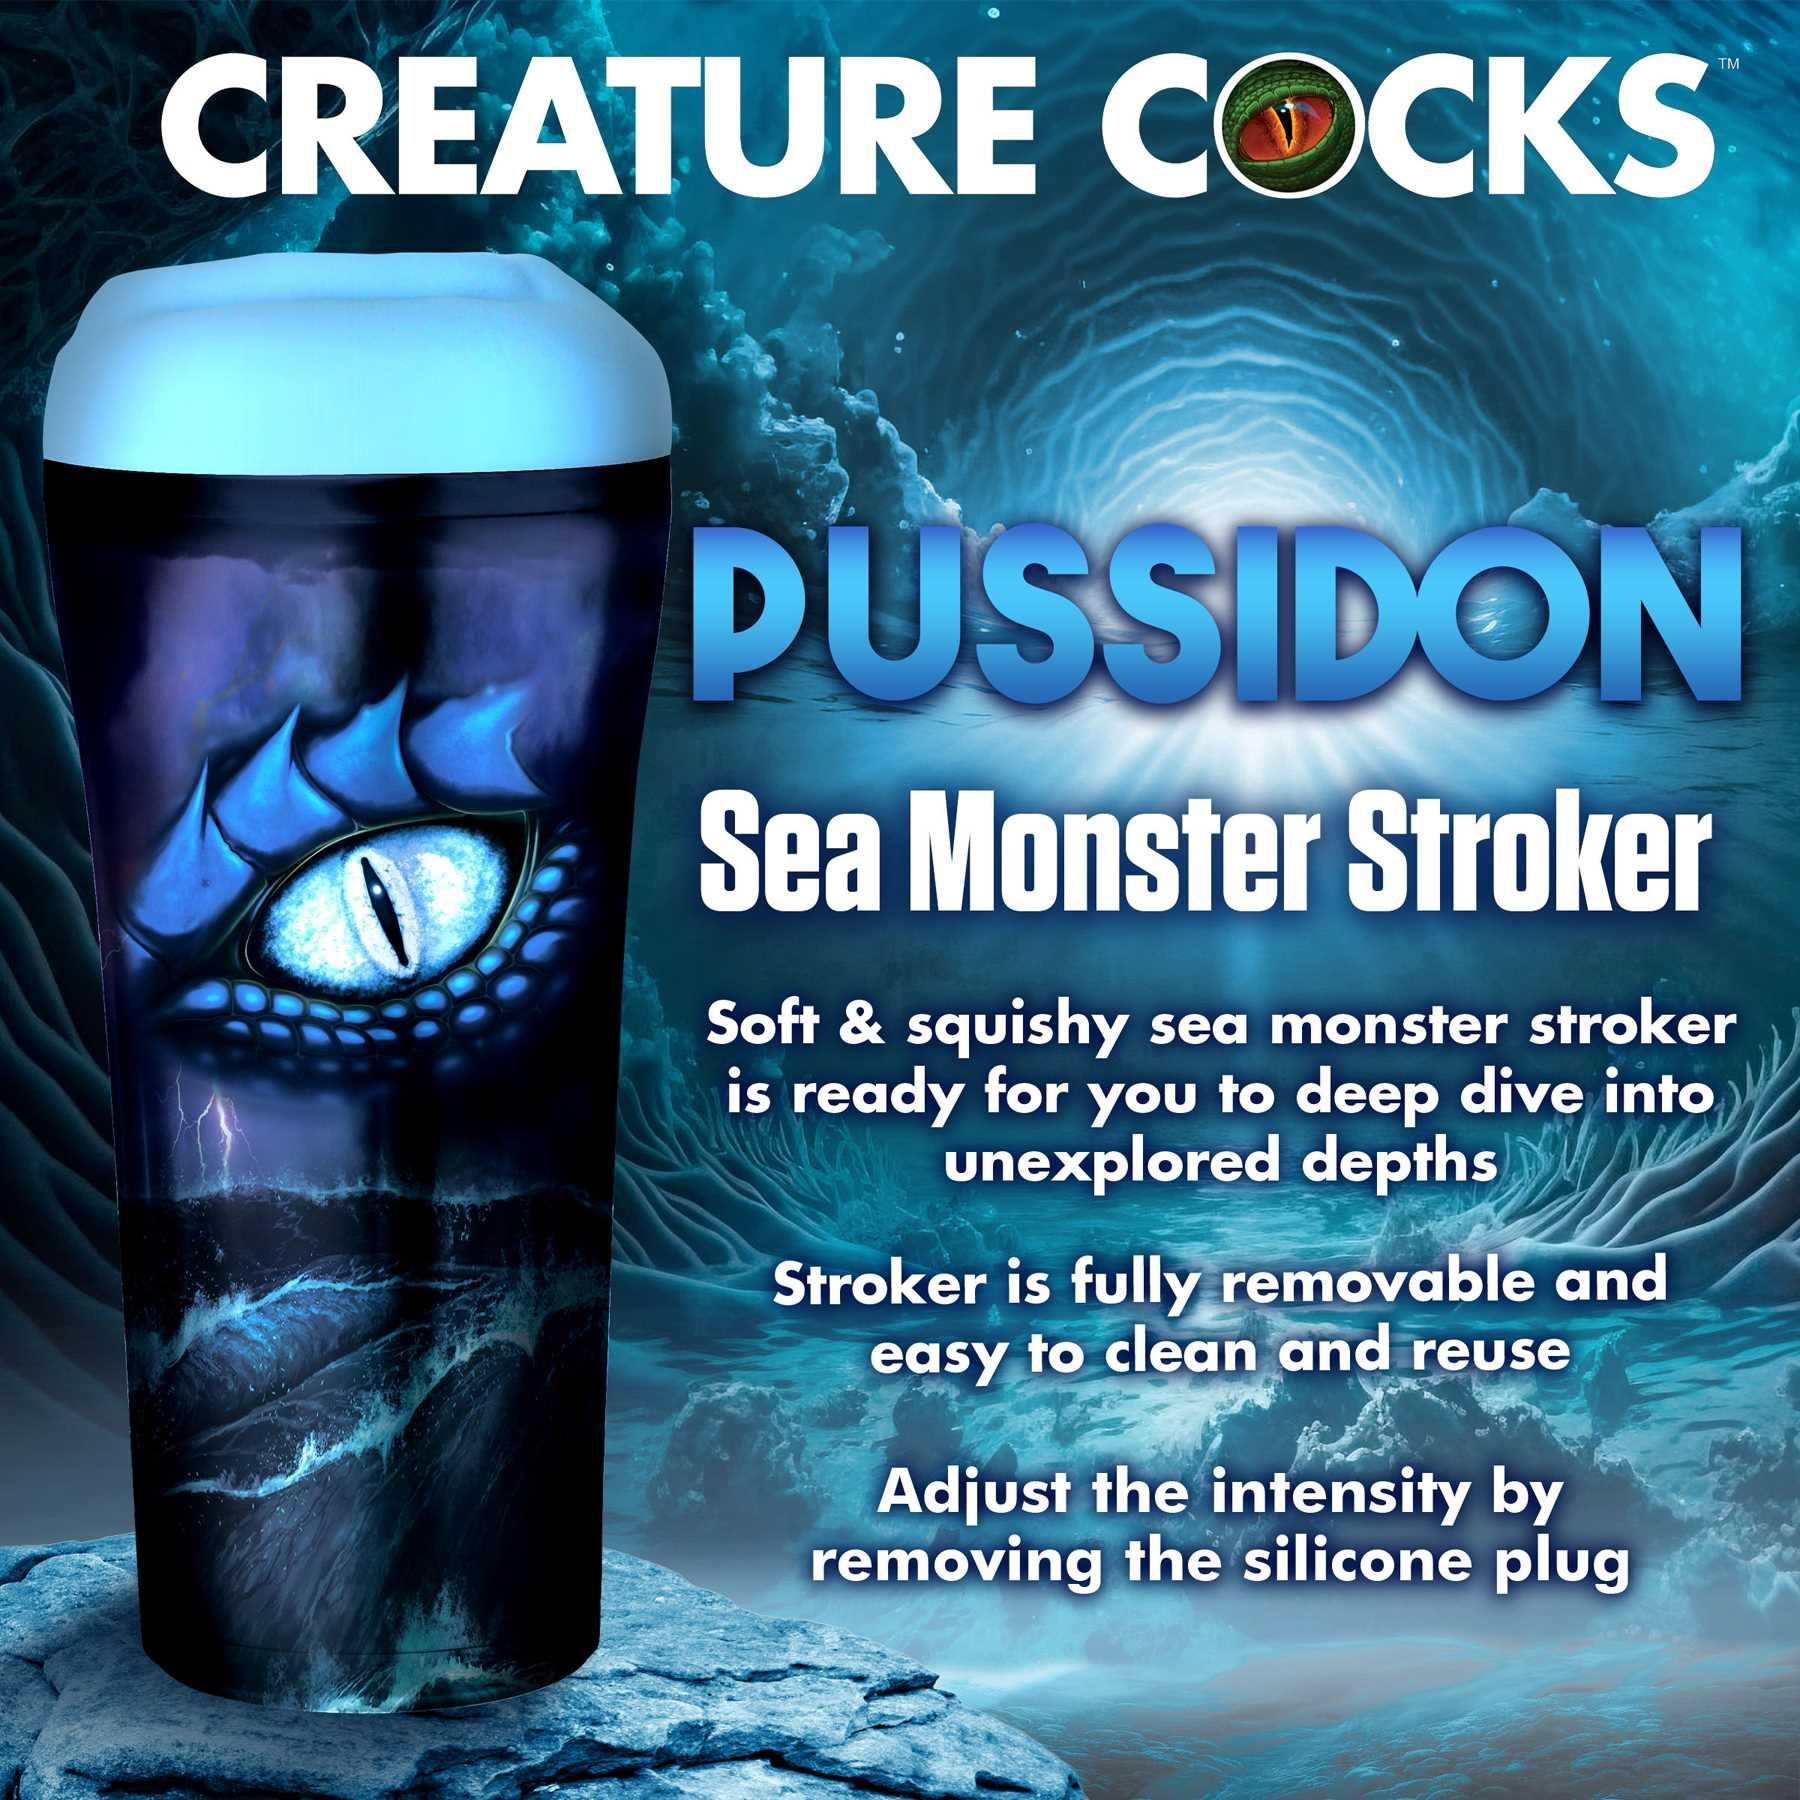 Creature Cocks Pussidon Sea Monster Stroker mood image #2